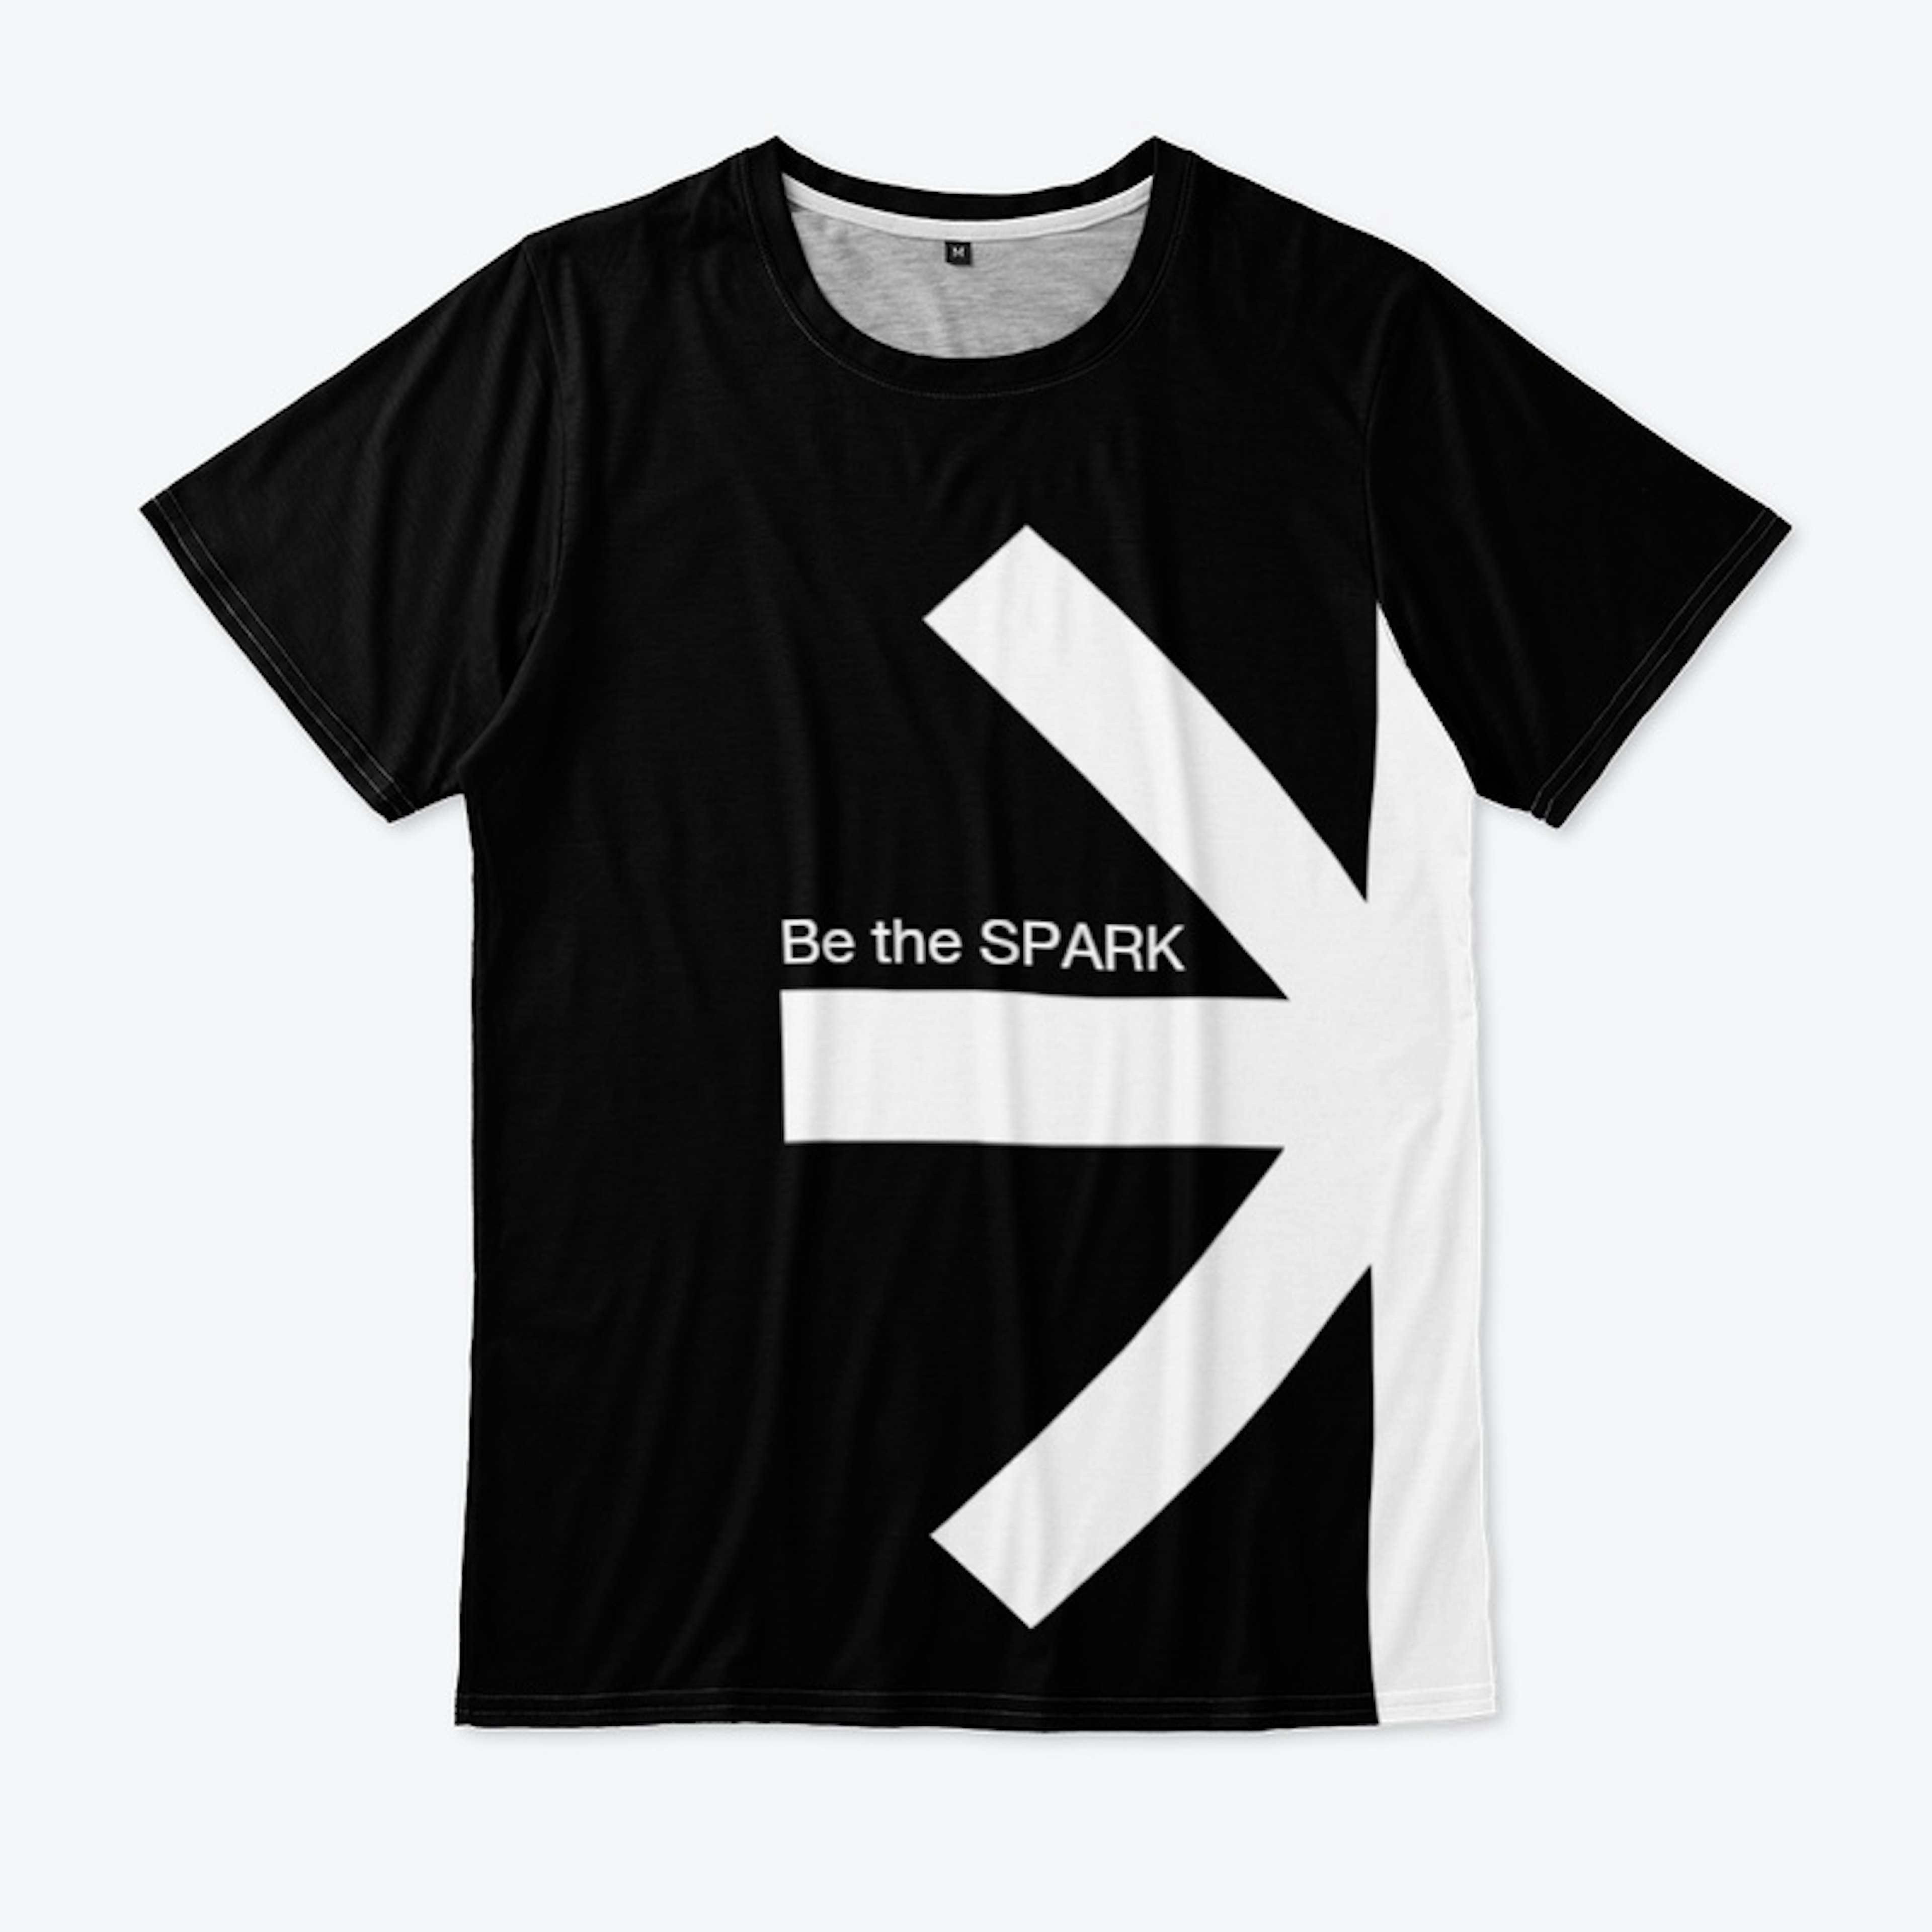 "Be the SPARK" Large White Spark Shirt